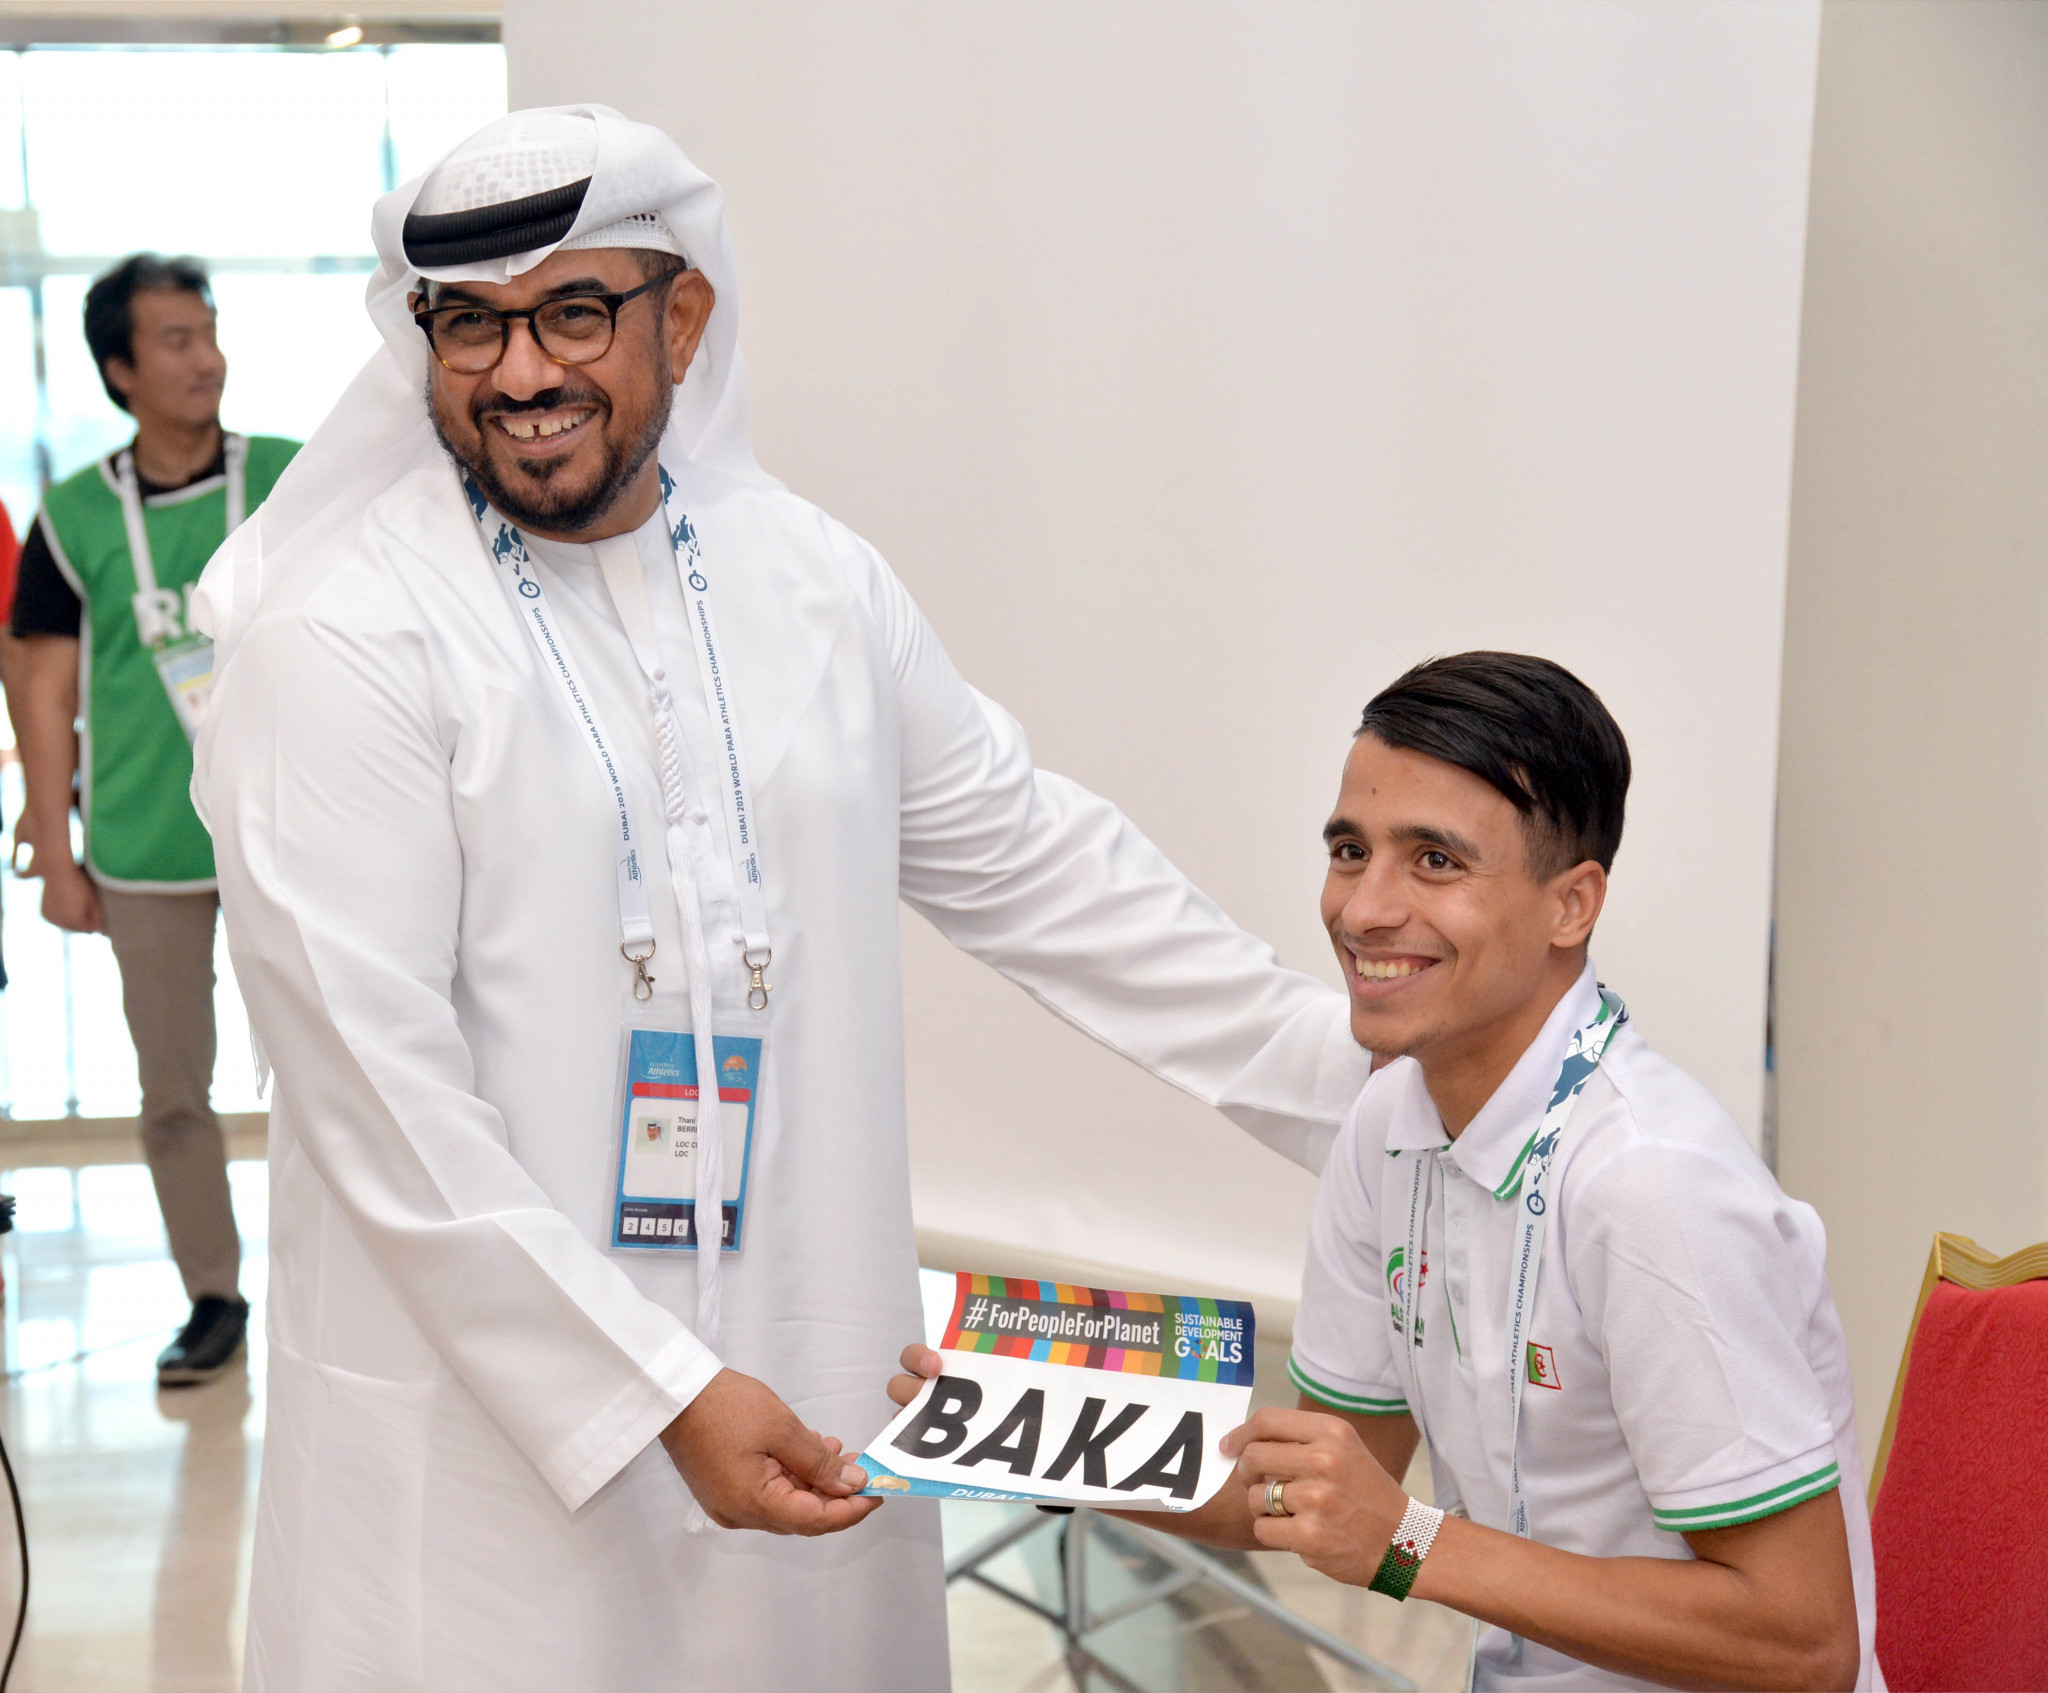 Algerian runner Abdellatif Baka received his bib from Dubai 2019 Organising Committee chairman, Thani Juma Berregad ©Dubai 2019